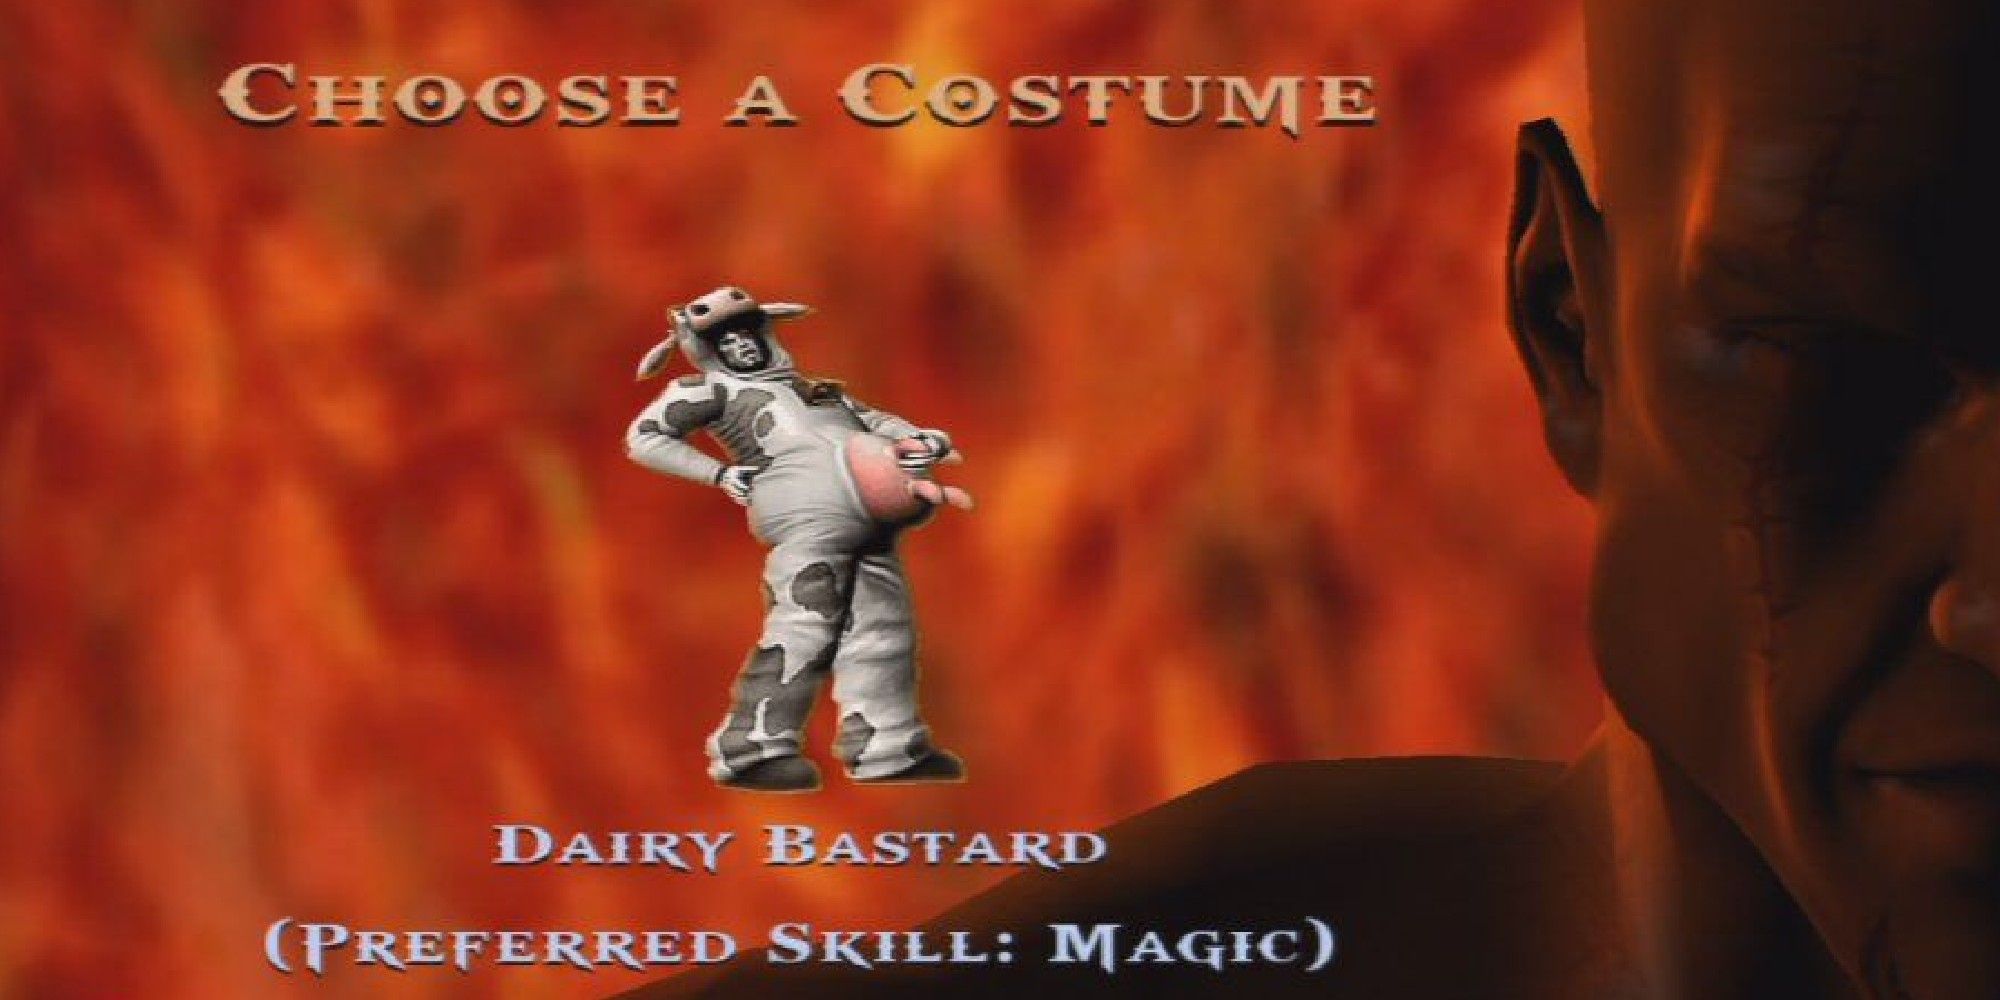 God-of-war-costume-dairy-bastard